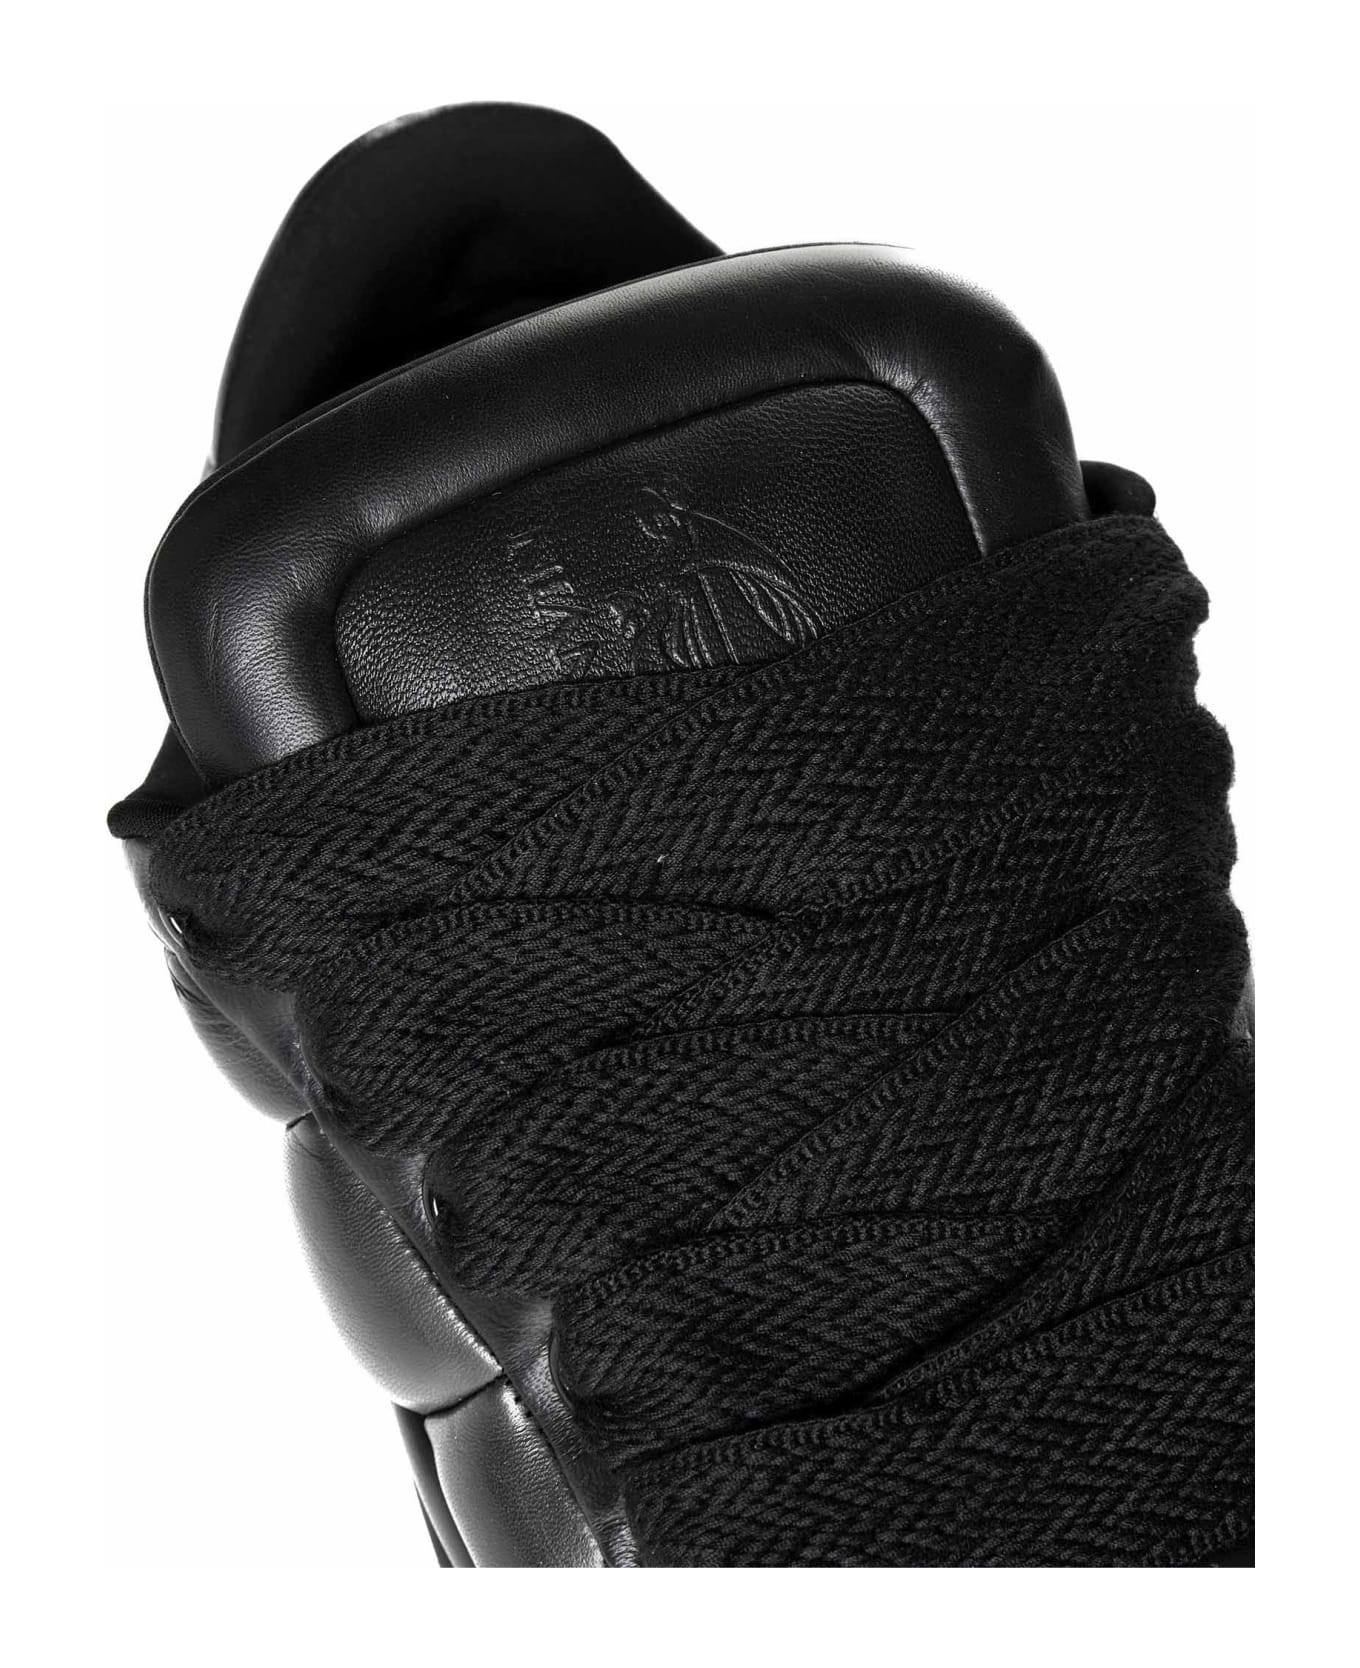 Lanvin Sneakers - Black/black